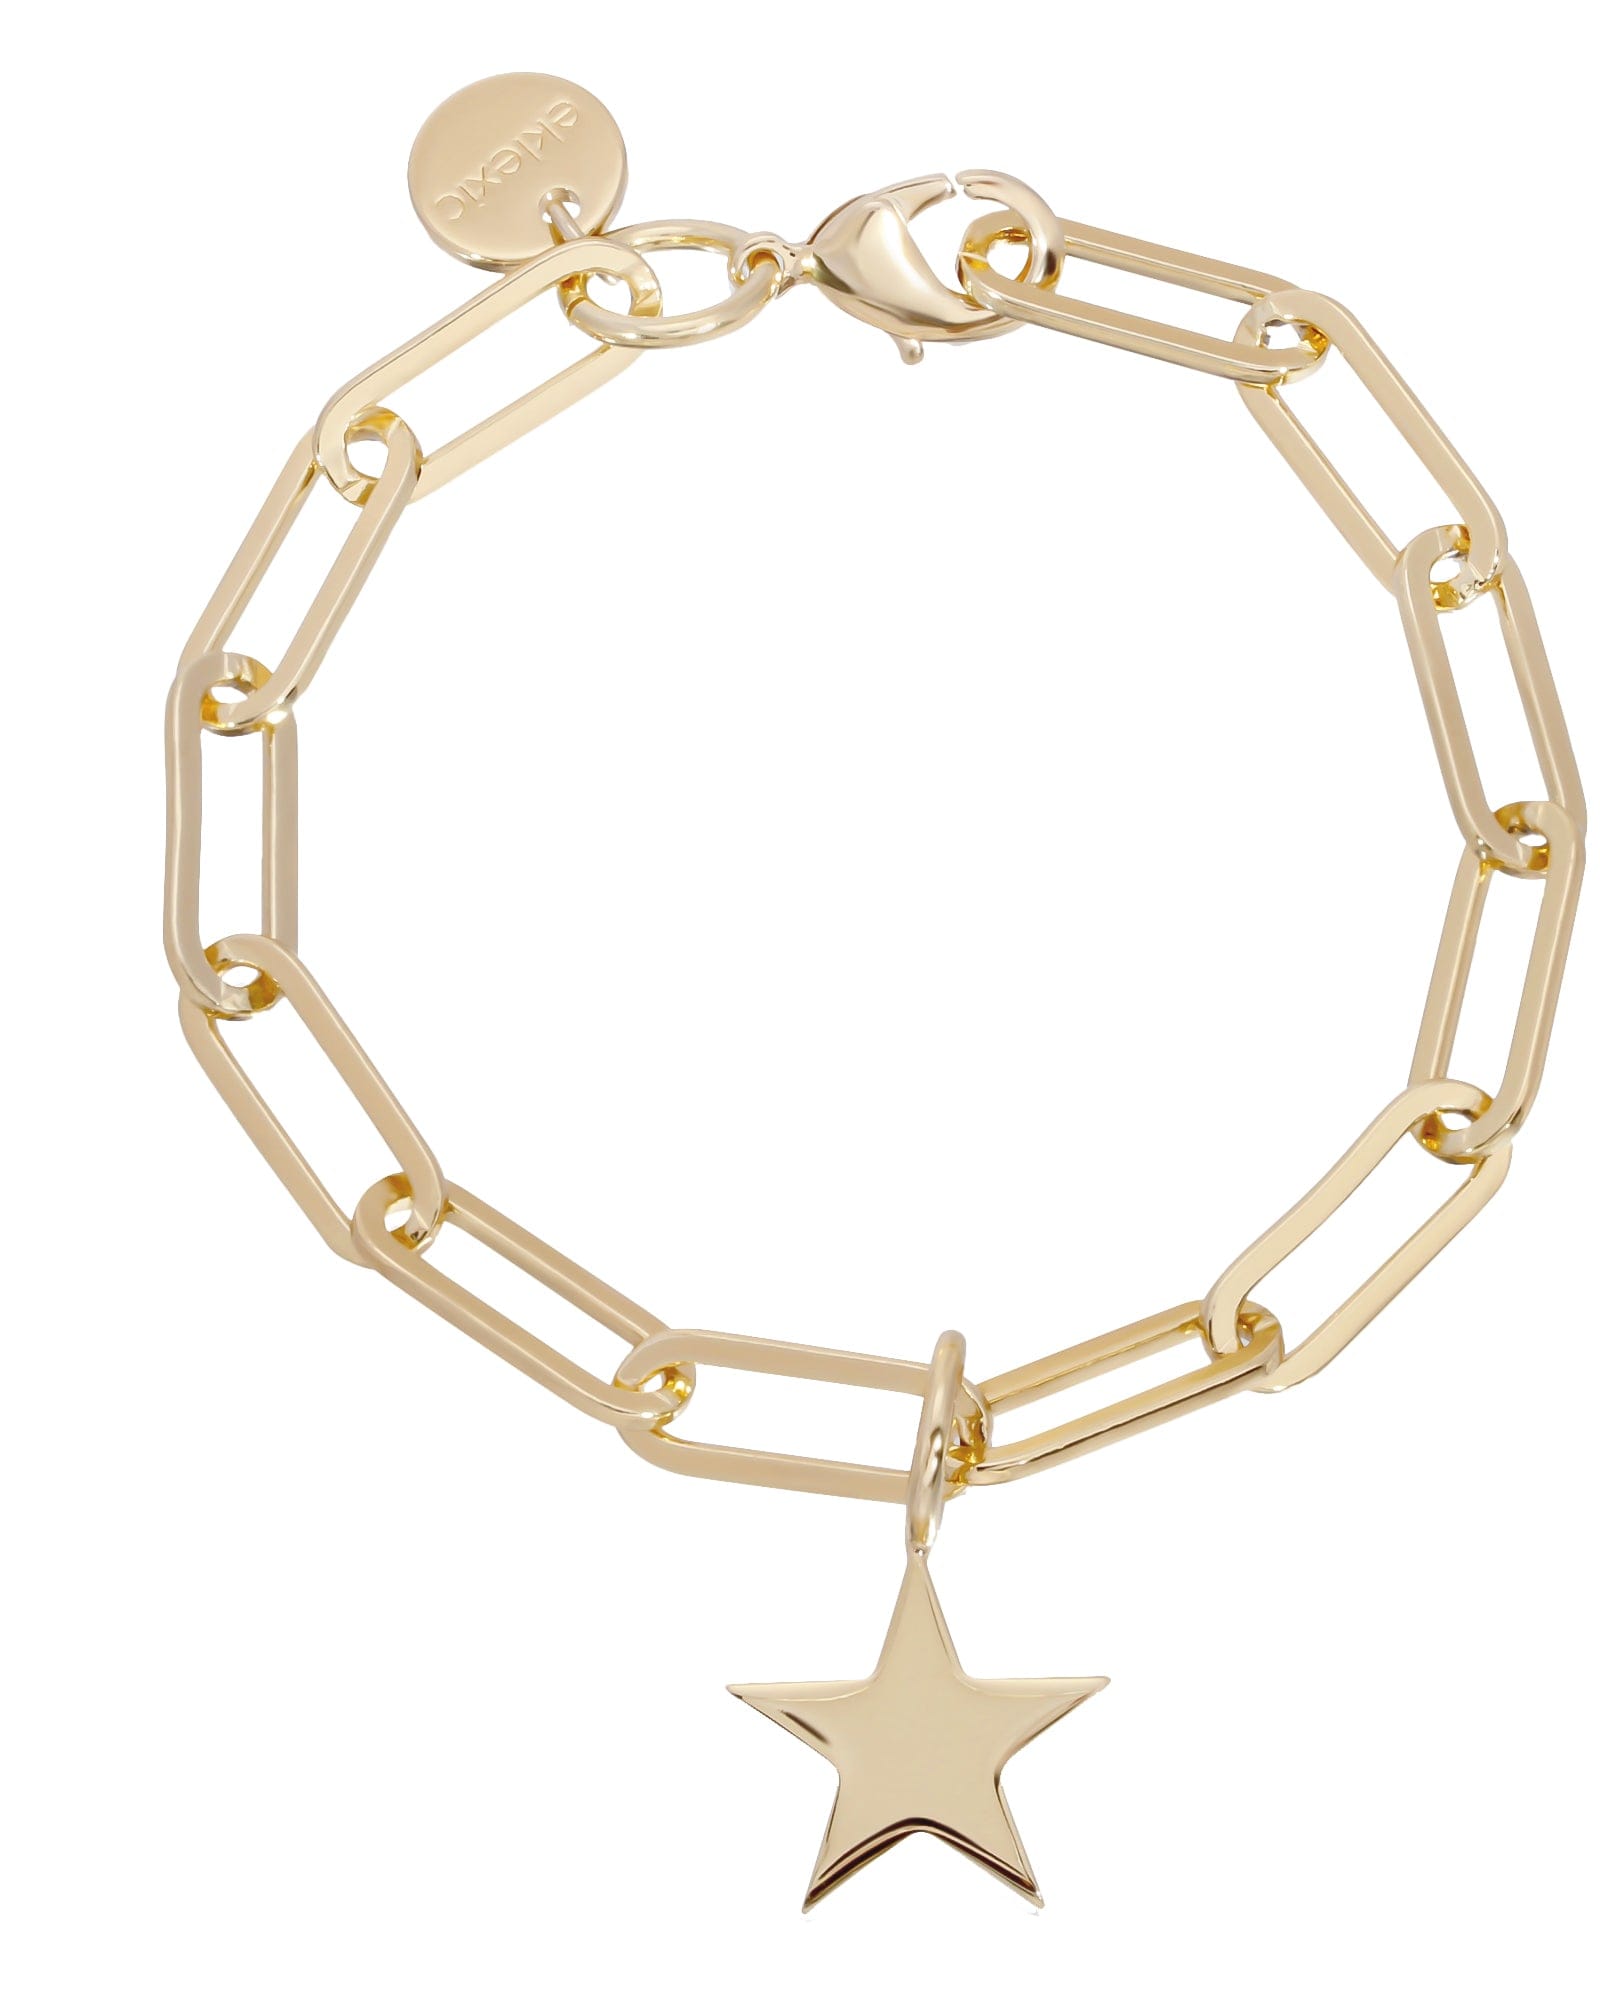 Stainless Steel Luxury Gold Roma Rope Woven Bracelet Set Fashion Men  Jewelry | eBay